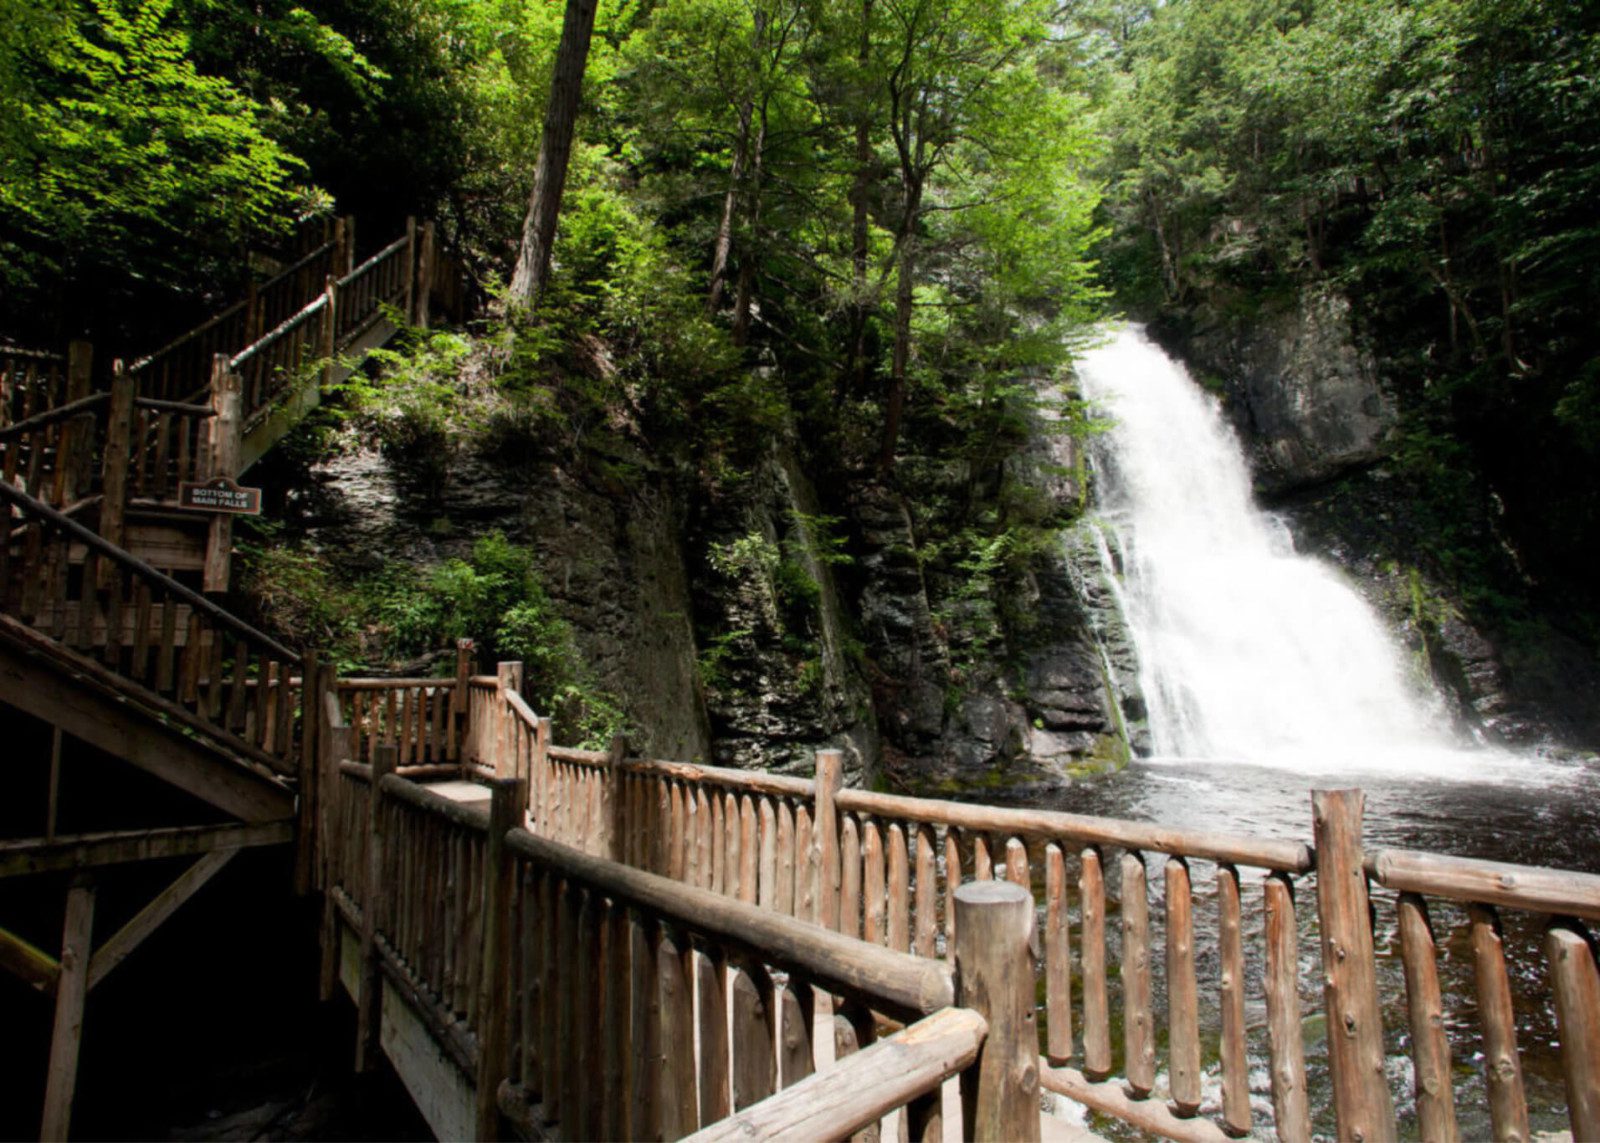 Bushkill Falls - perfect location for some stunning vacation pics.